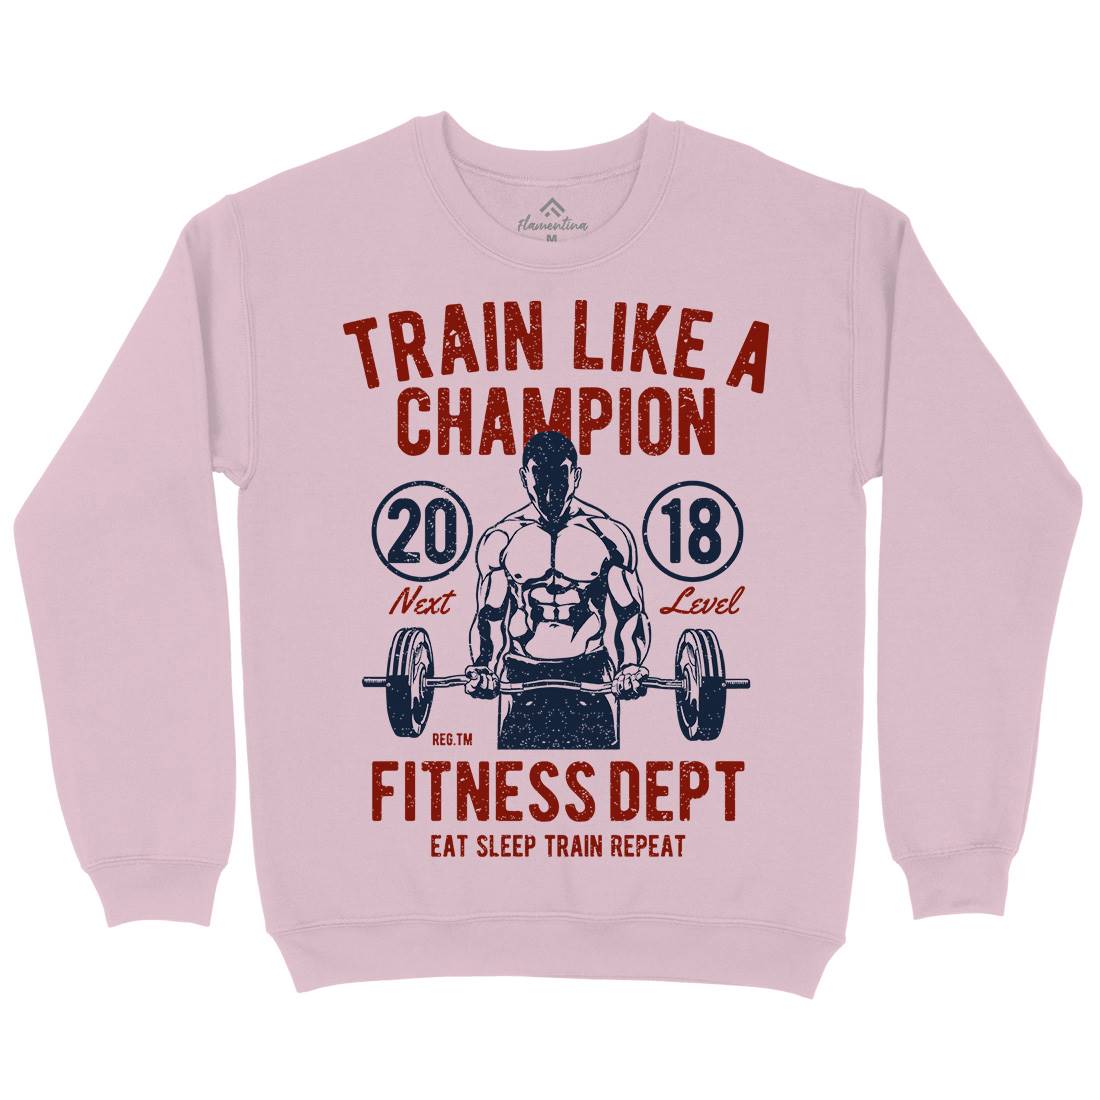 Train Like A Champion Kids Crew Neck Sweatshirt Gym A779